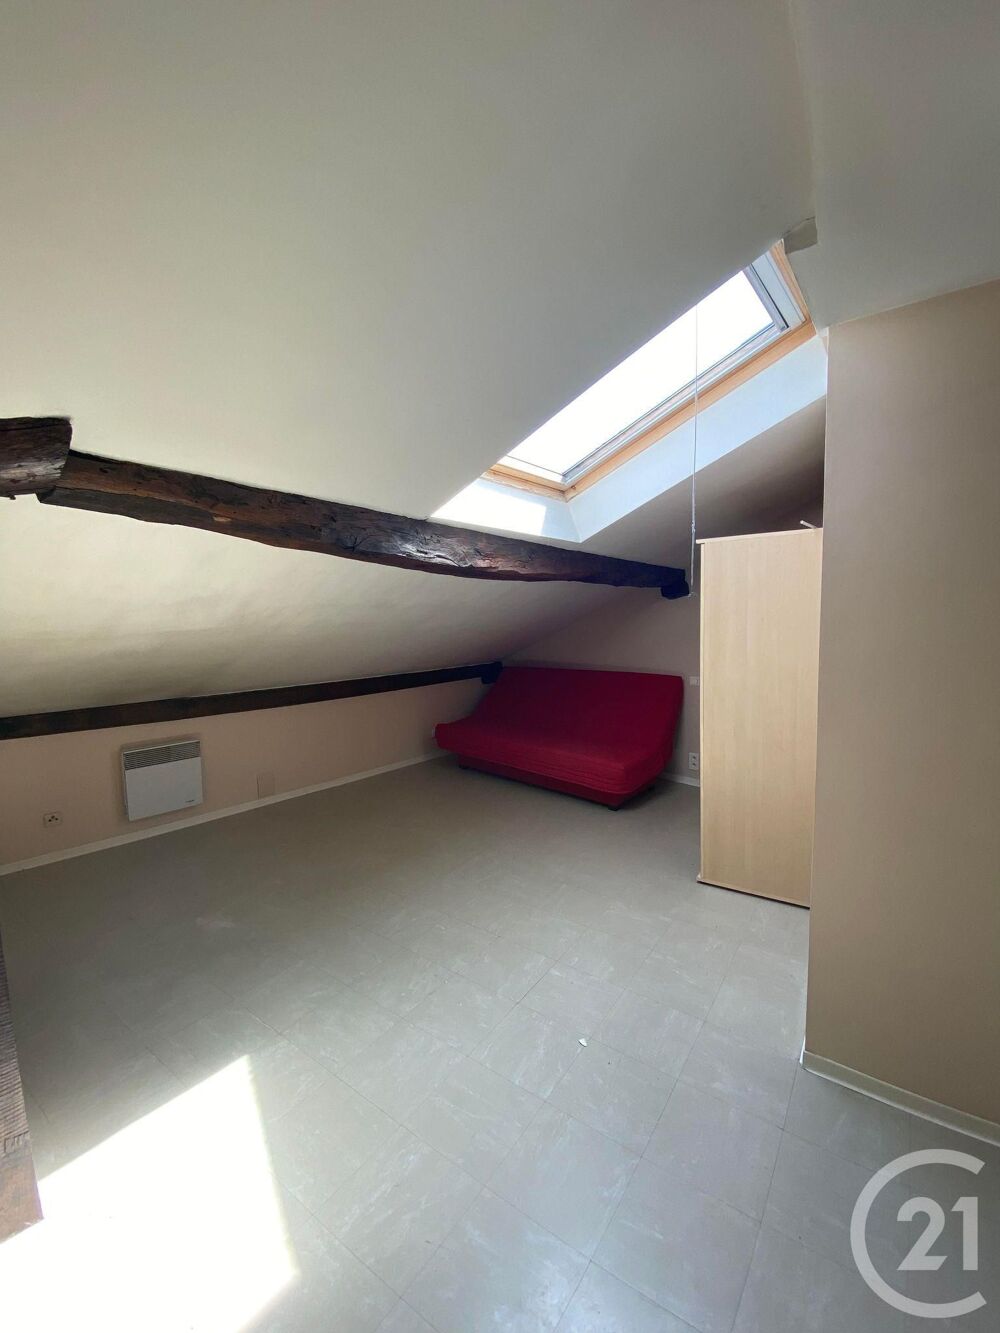 location Appartement - 1 pice(s) - 20 m Castres (81100)